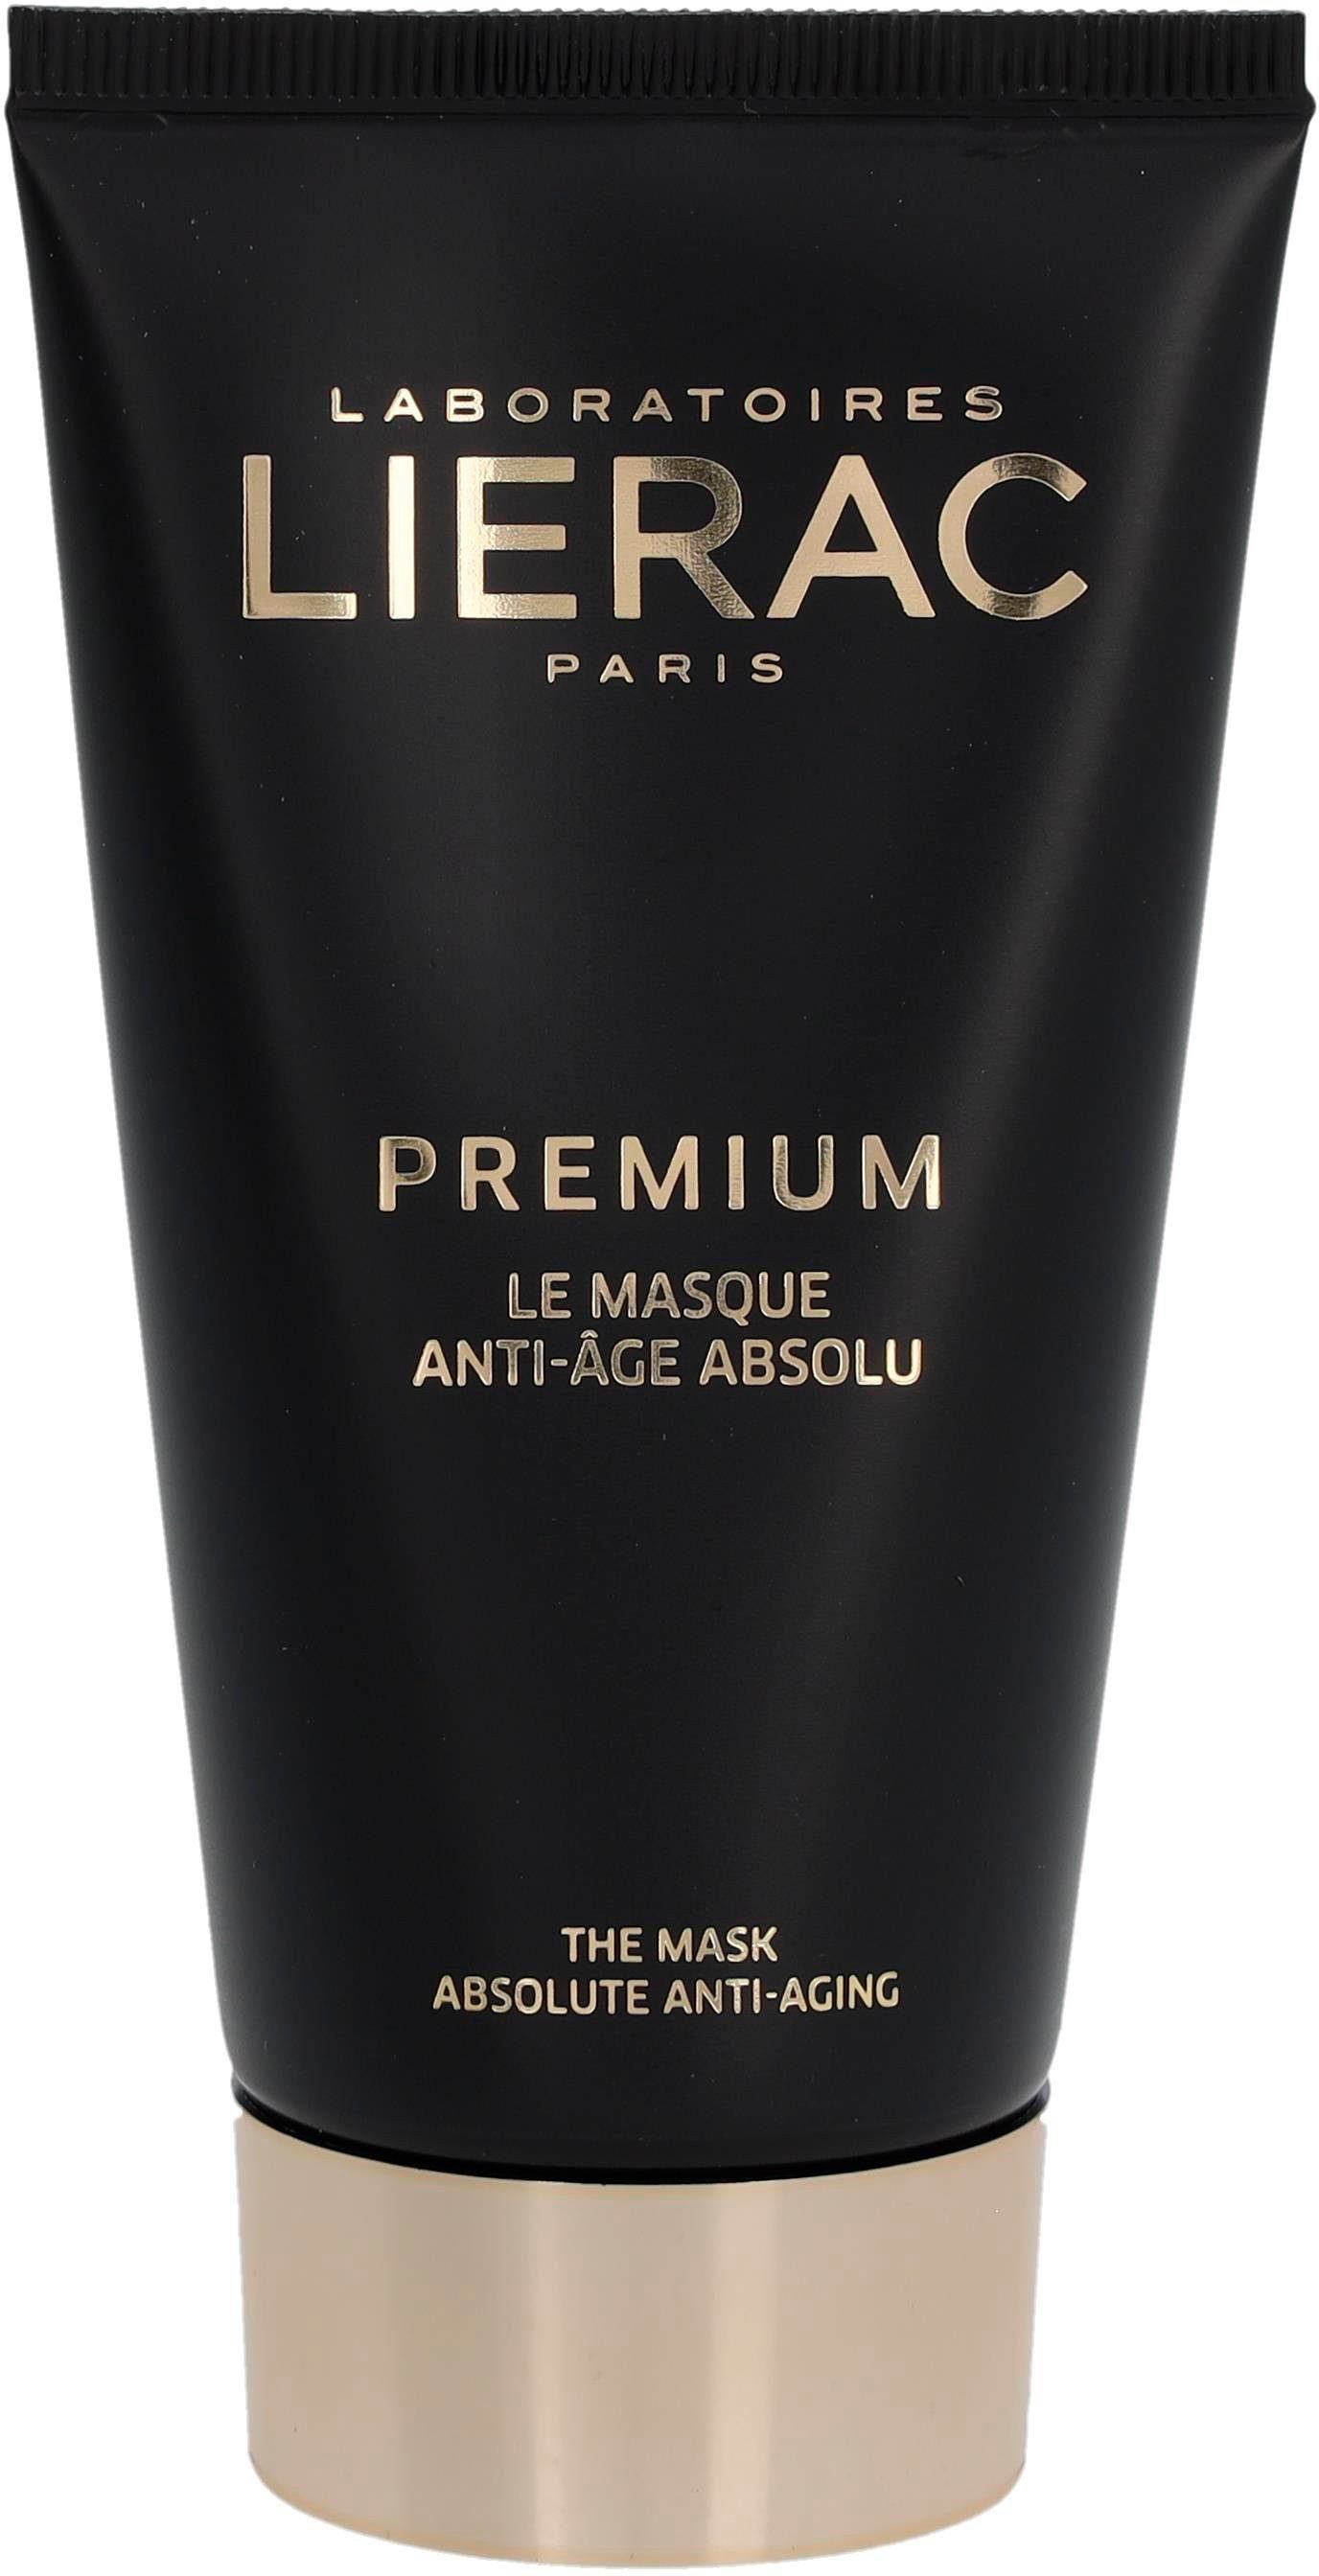 Premium Masque Le Anti-Age Absolu LIERAC Gesichtsmaske